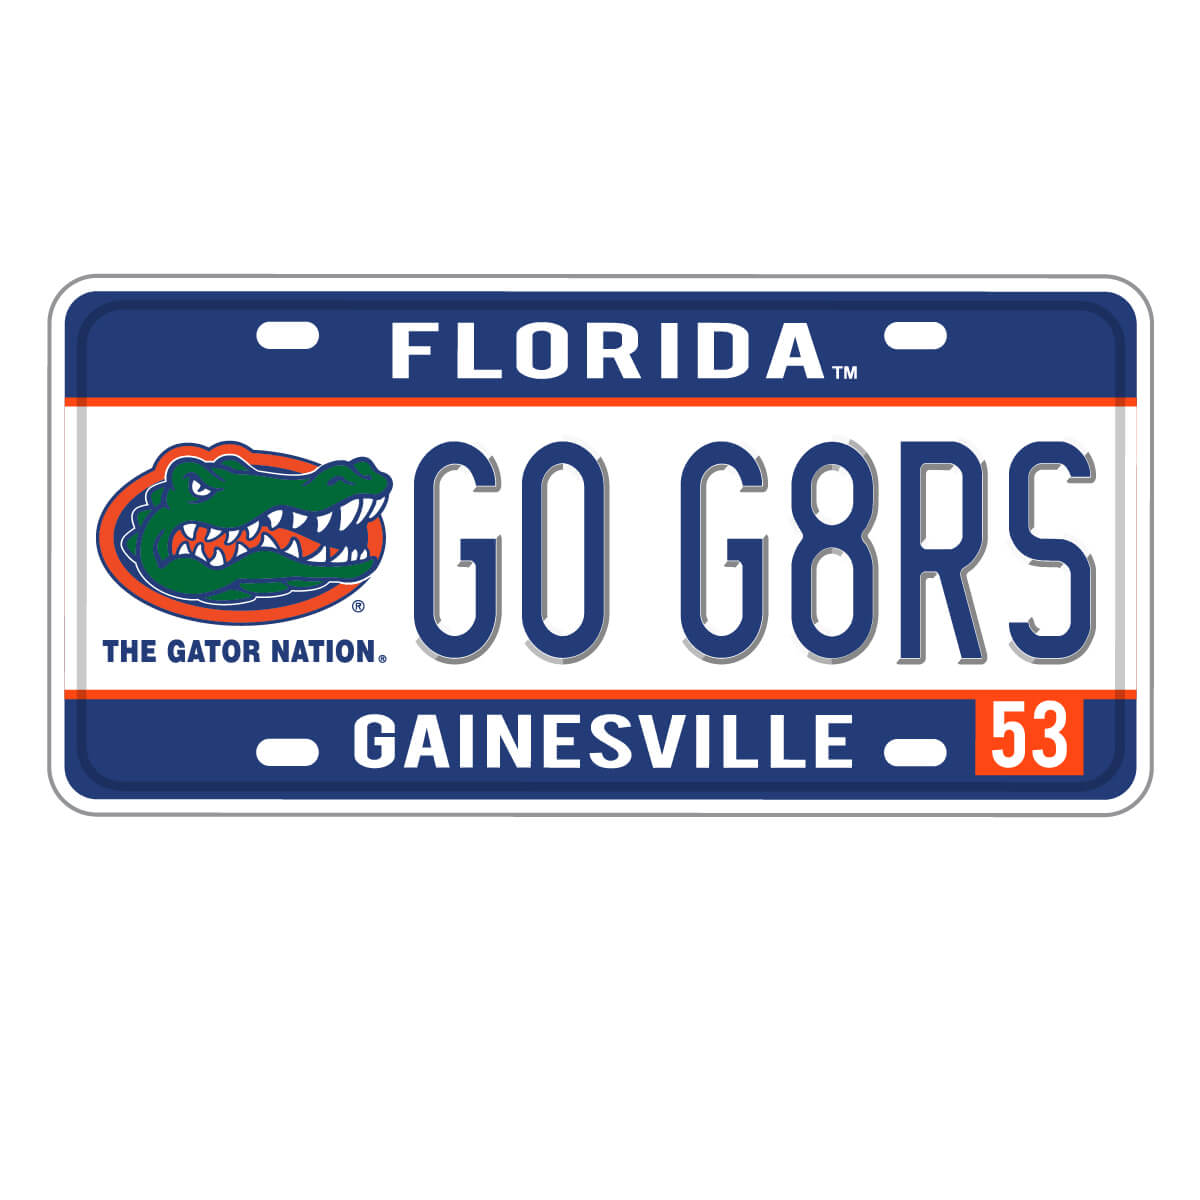 Florida Gators License Plate Decal